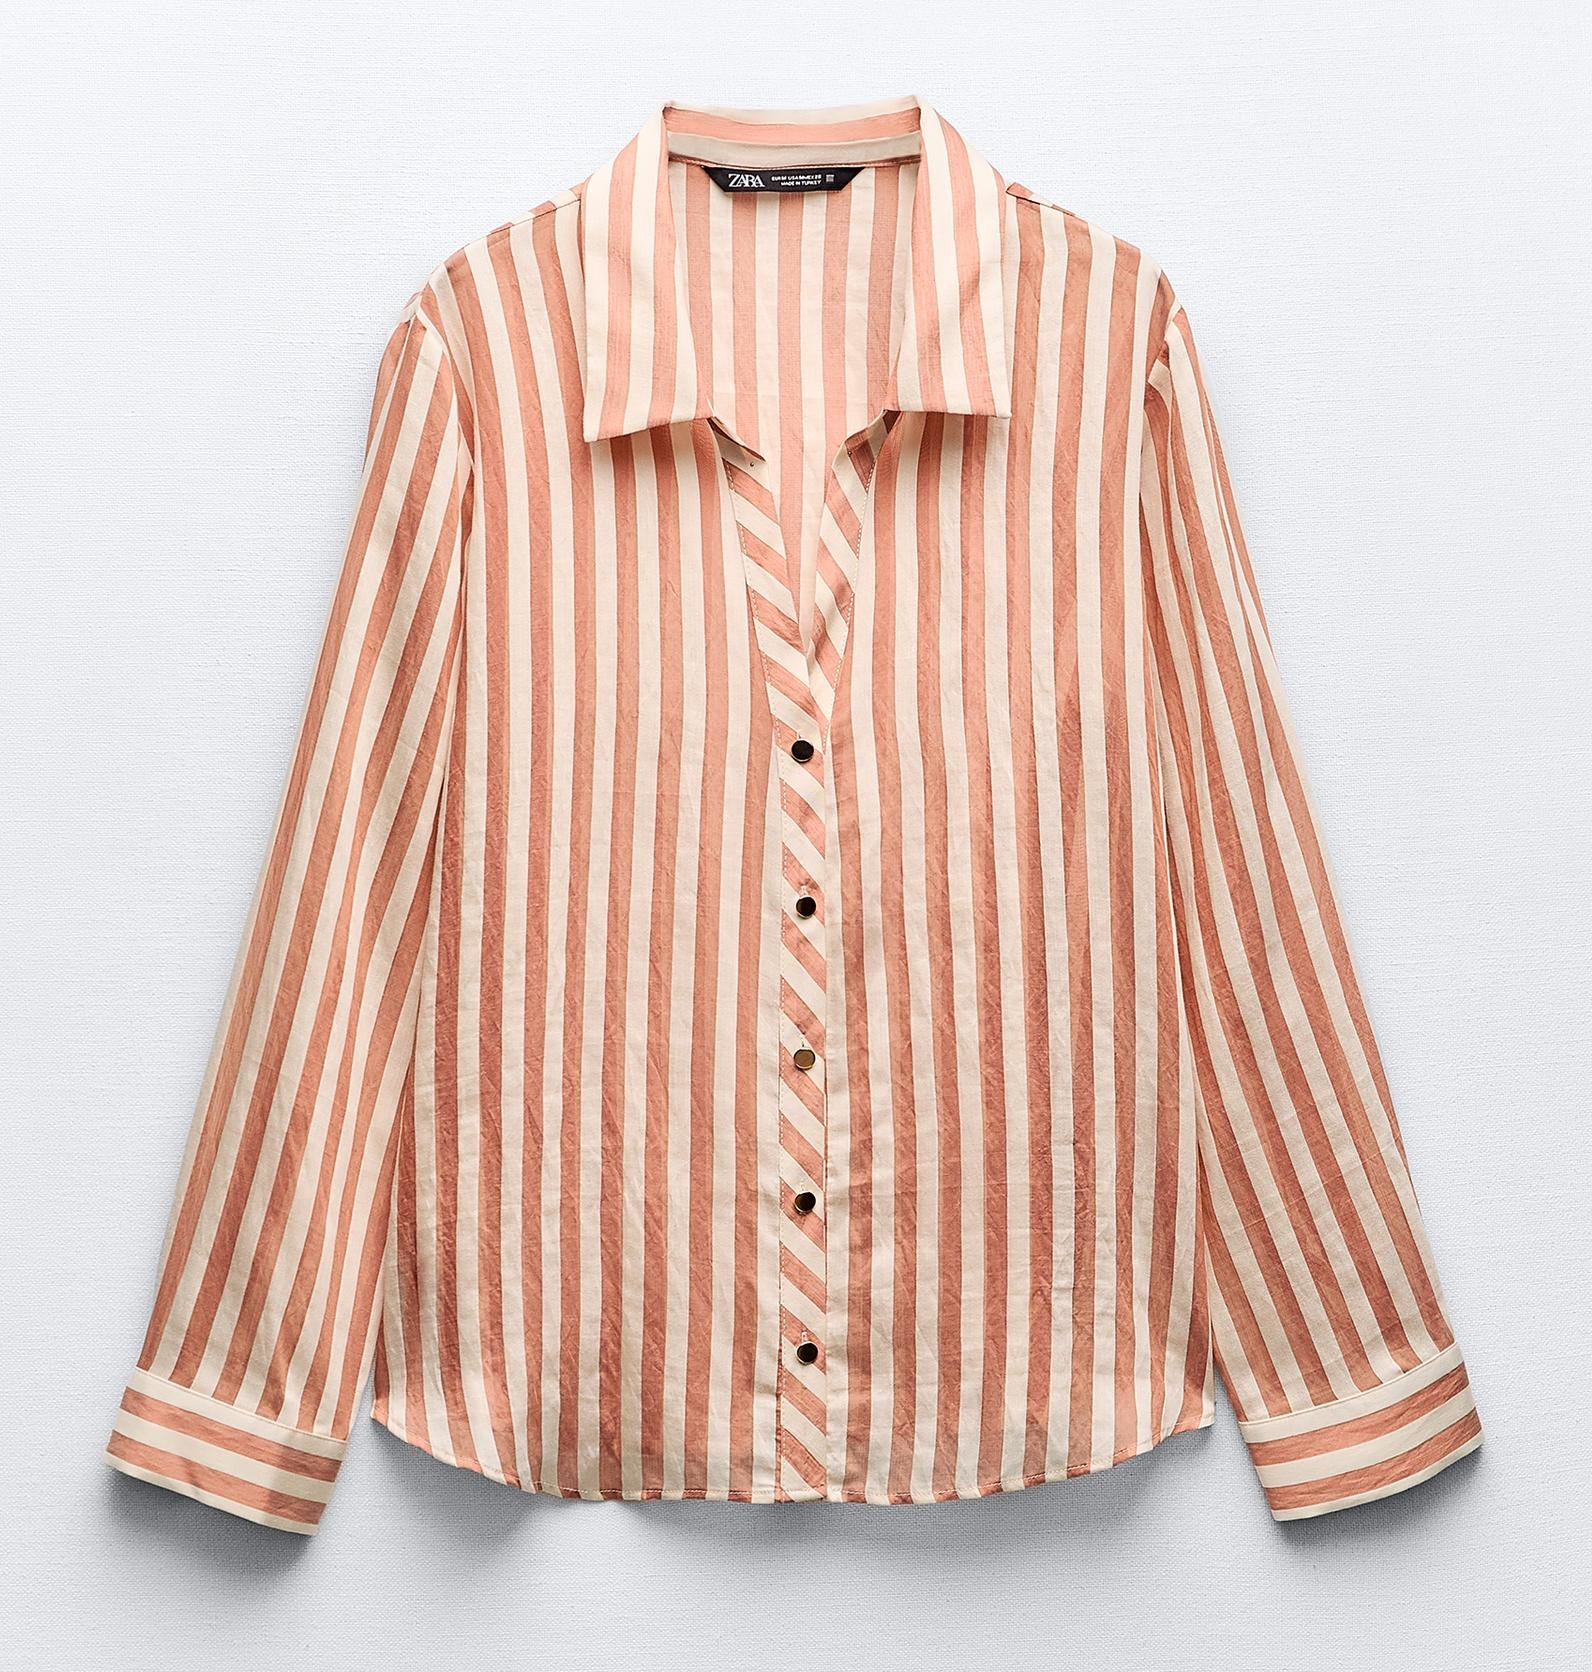 Рубашка Zara Striped, темно-оранжевый рубашка в полоску с длинными рукавами xl синий